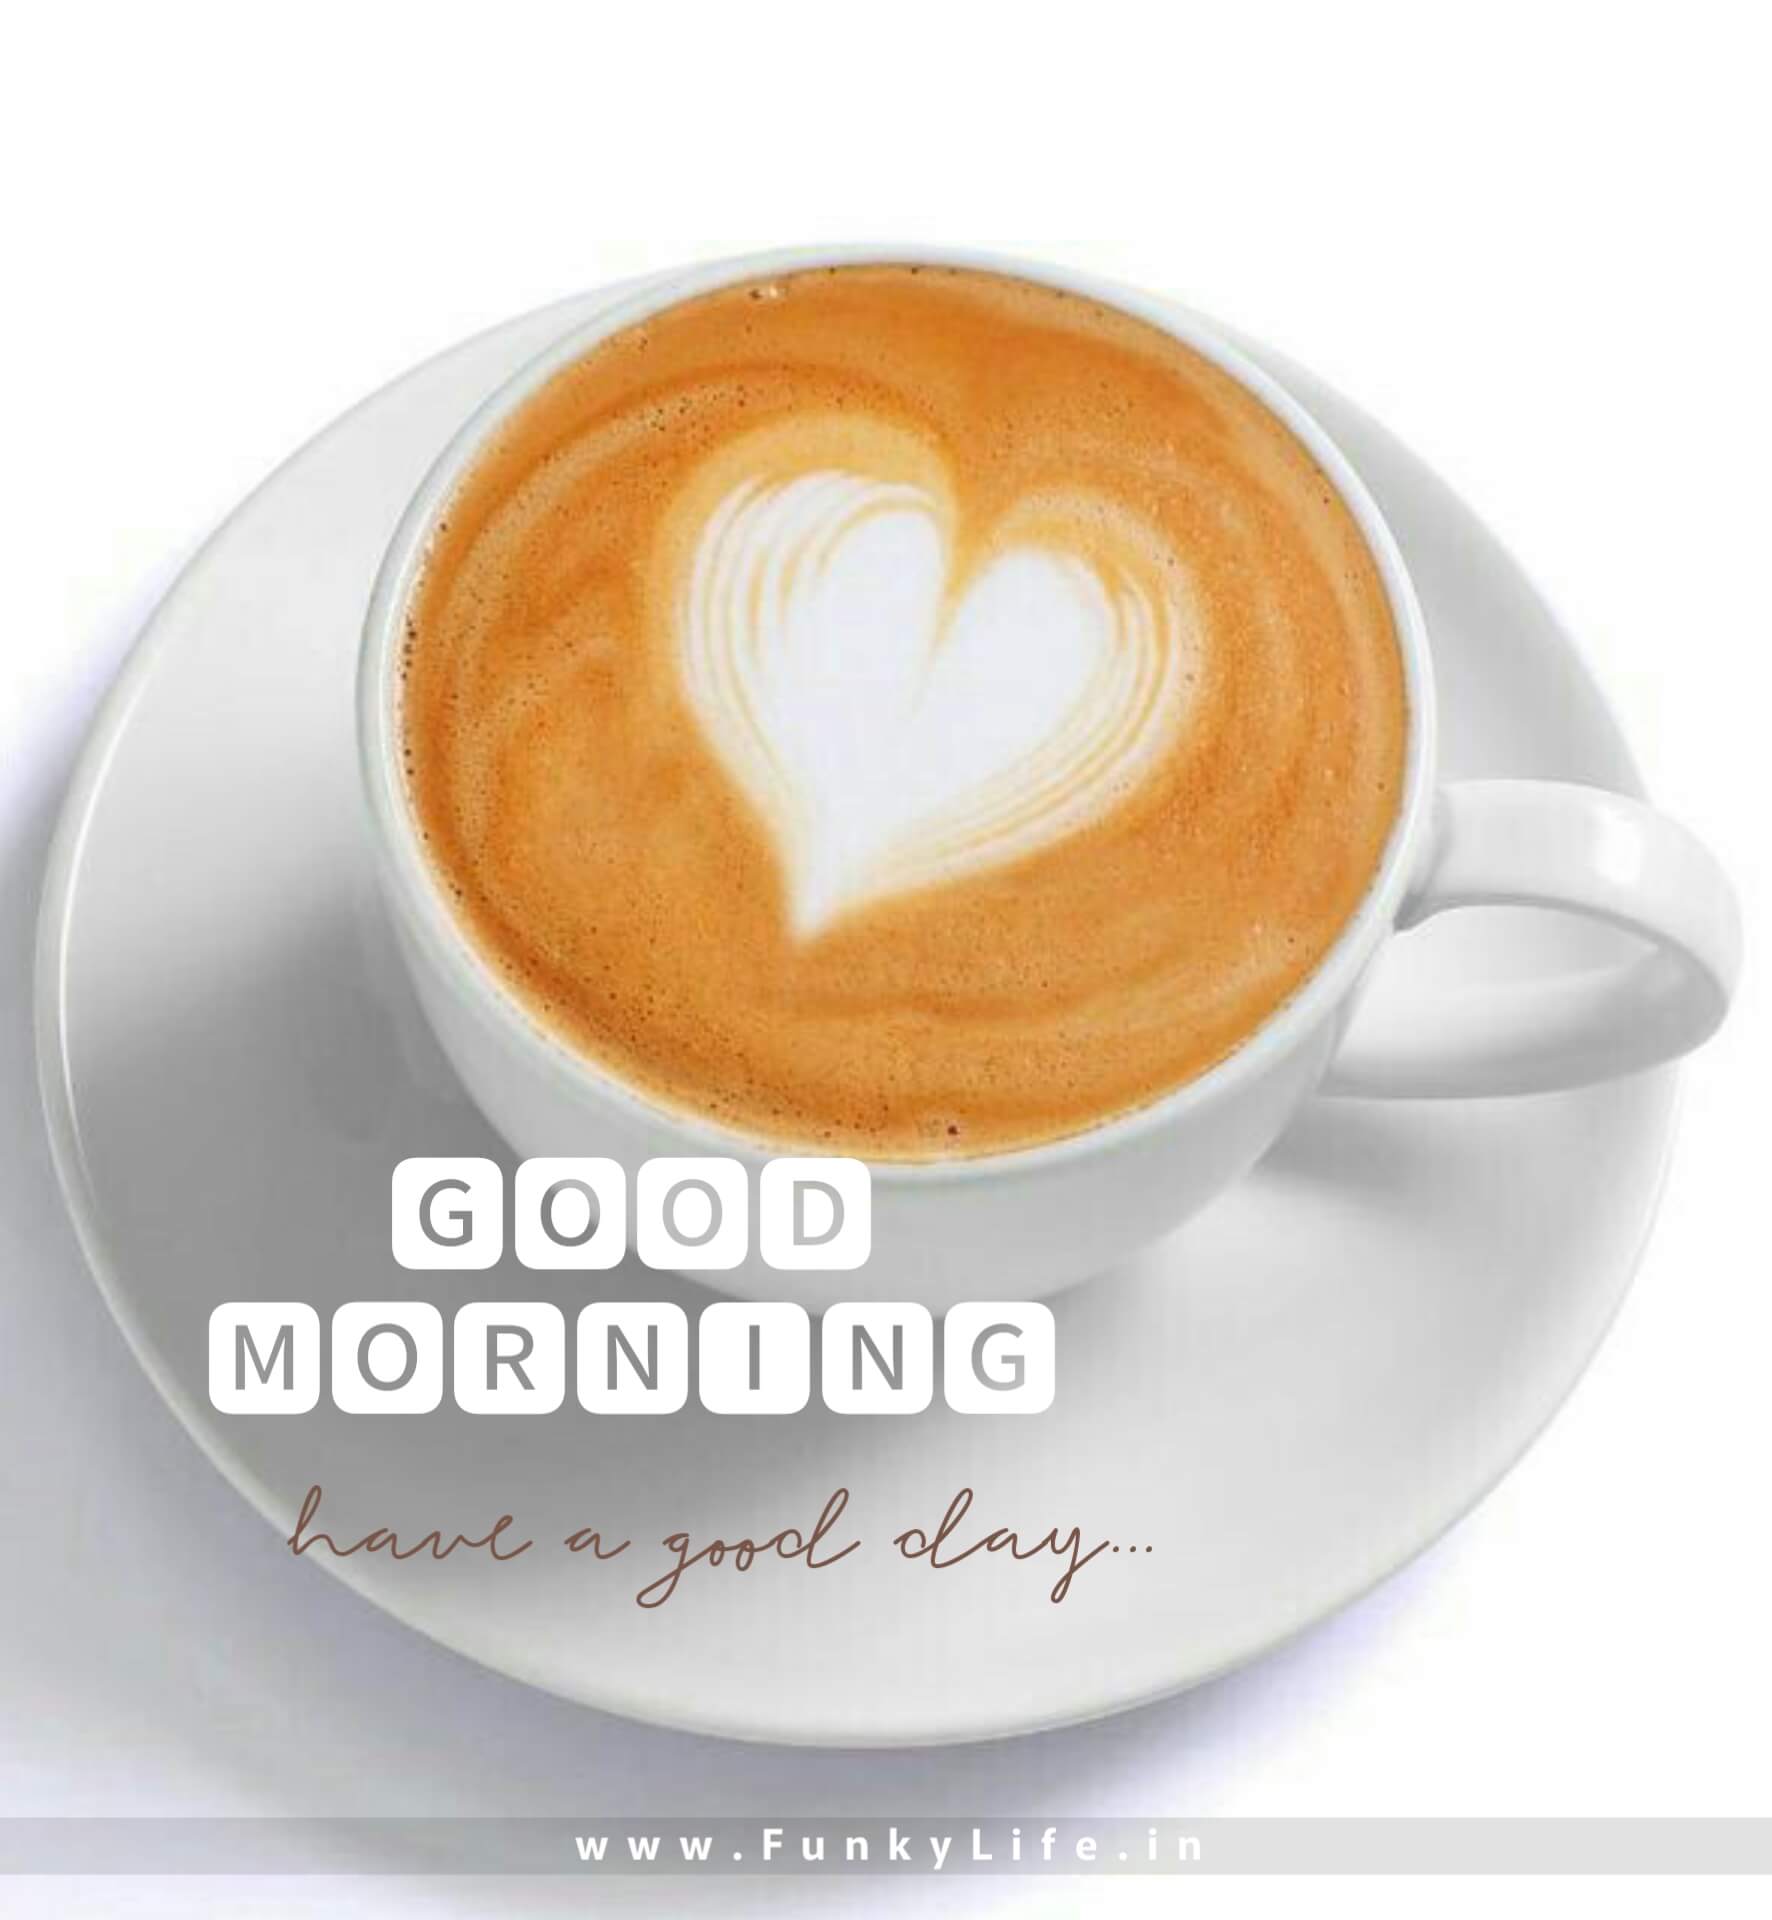 Good Morning Coffee Image